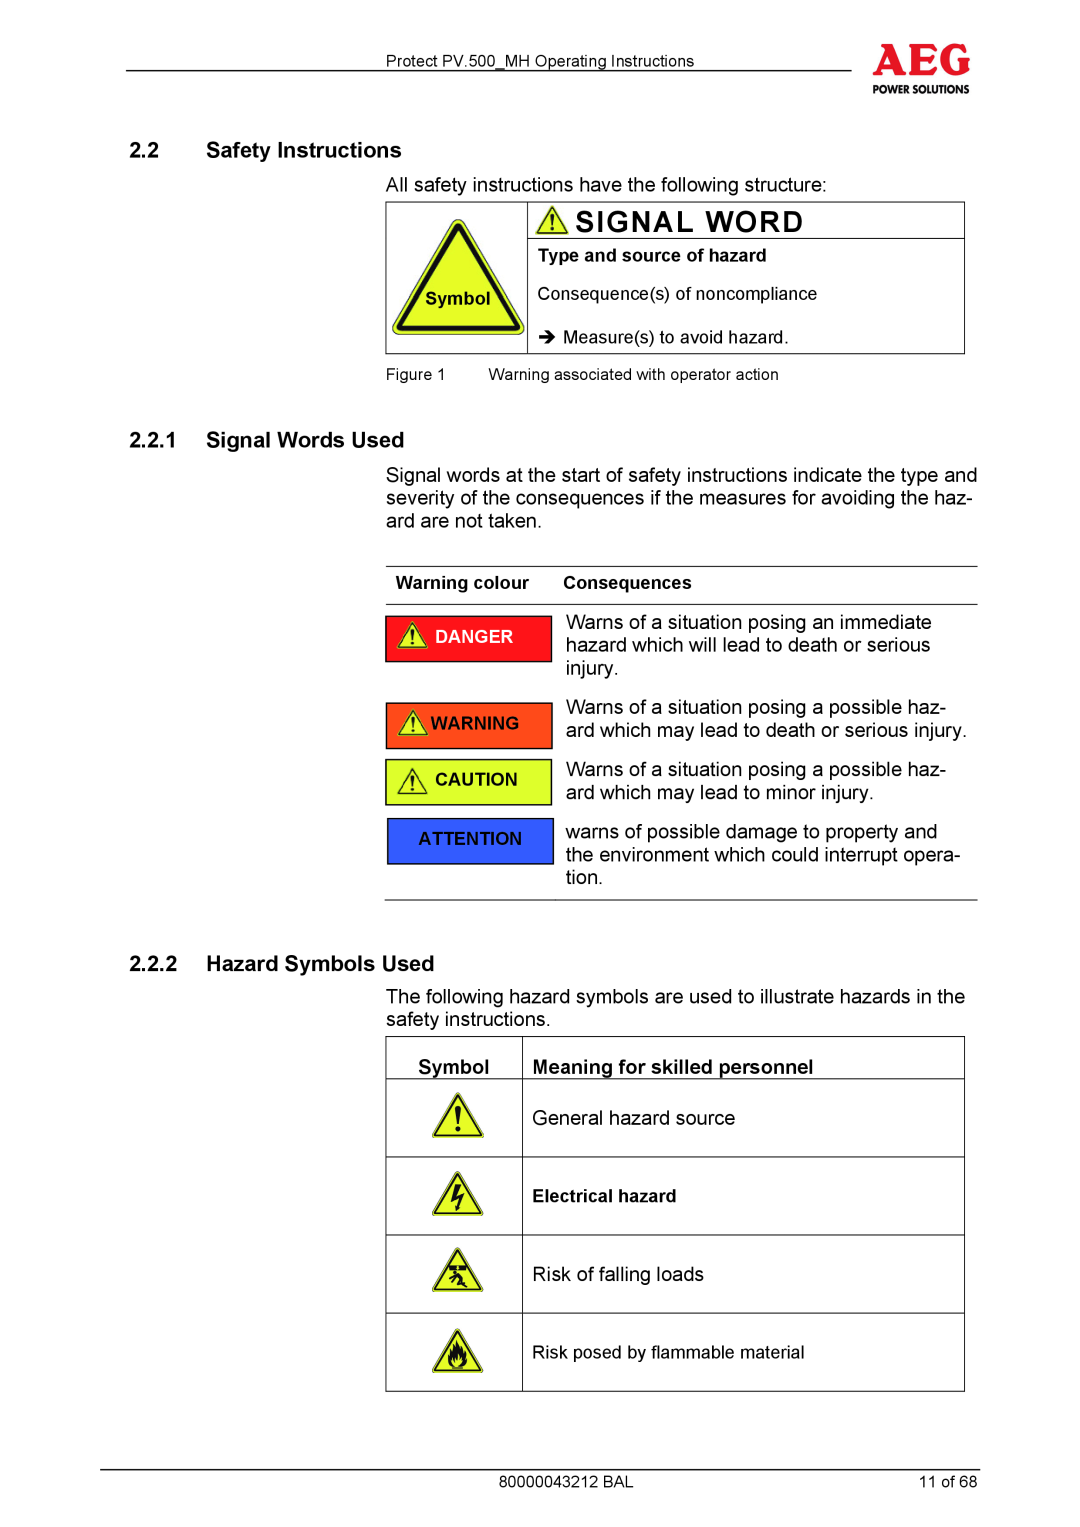 AEG PV.500-MH manual 2.2Safety Instructions, 2.2.1Signal Words Used, 2.2.2Hazard Symbols Used 